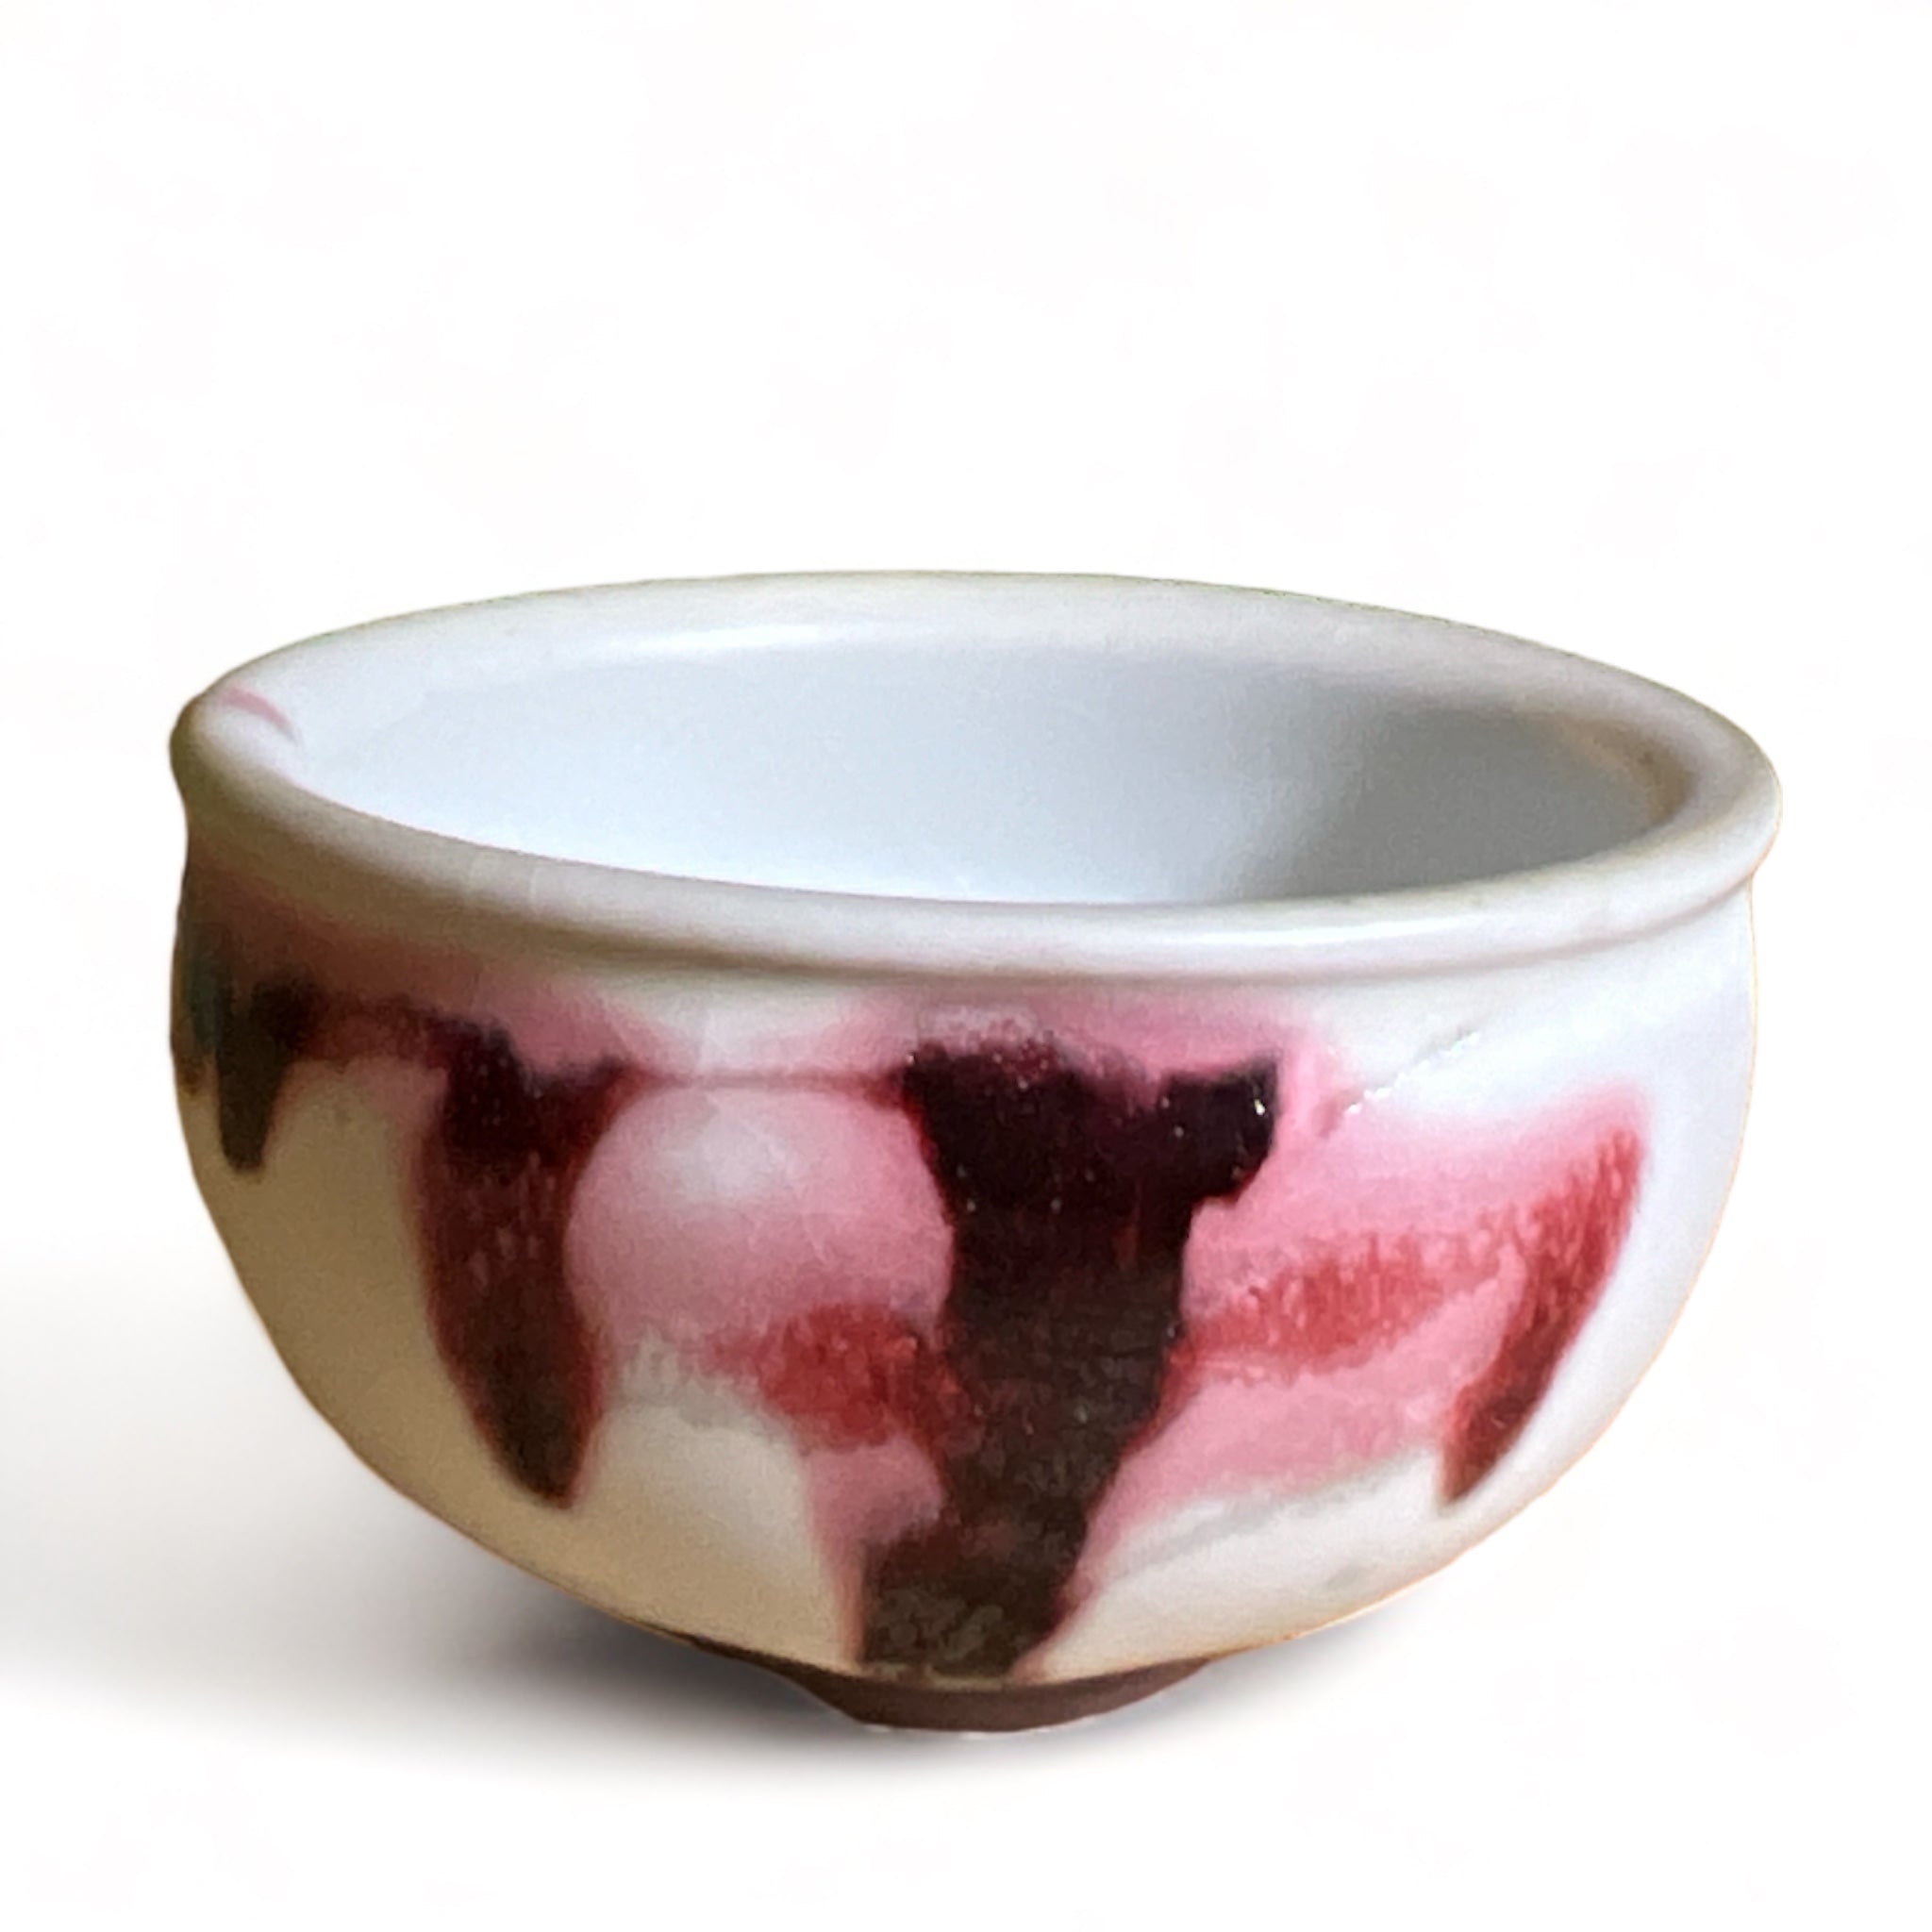 Taiwanese Handmade Wood-Fired Ceramic Teacup - Cherry Blossom